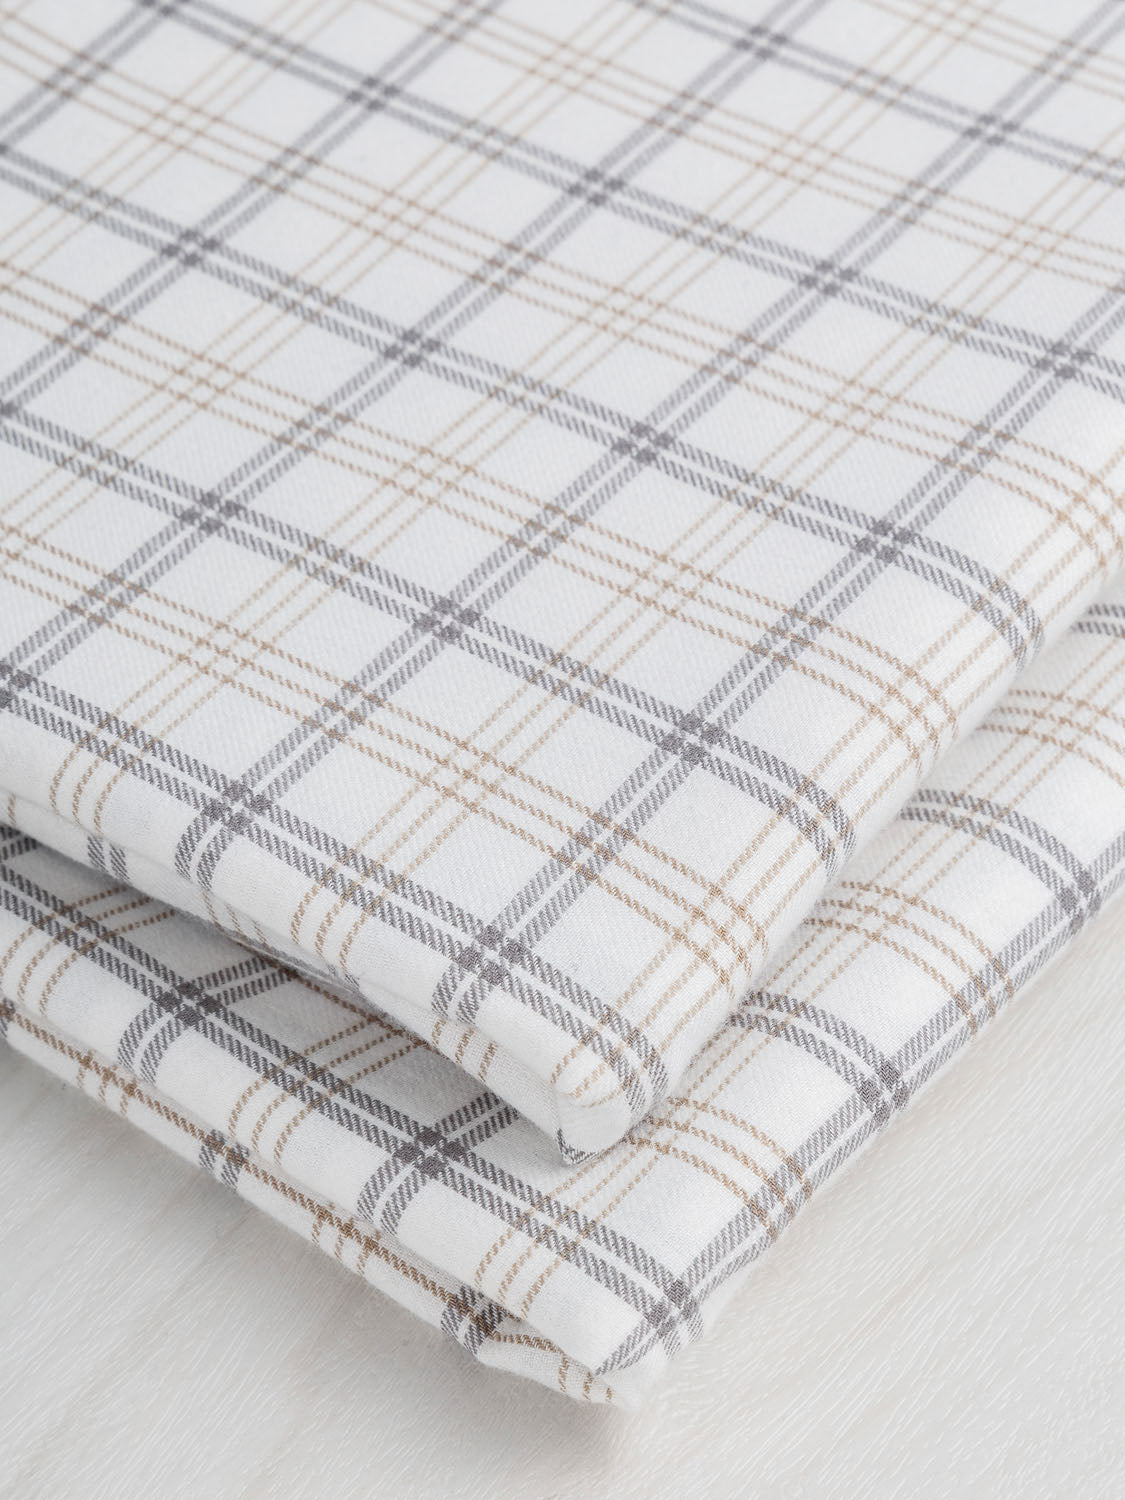 Tartan Cotton Flannel - Cream + Taupe + Grey | Core Fabrics